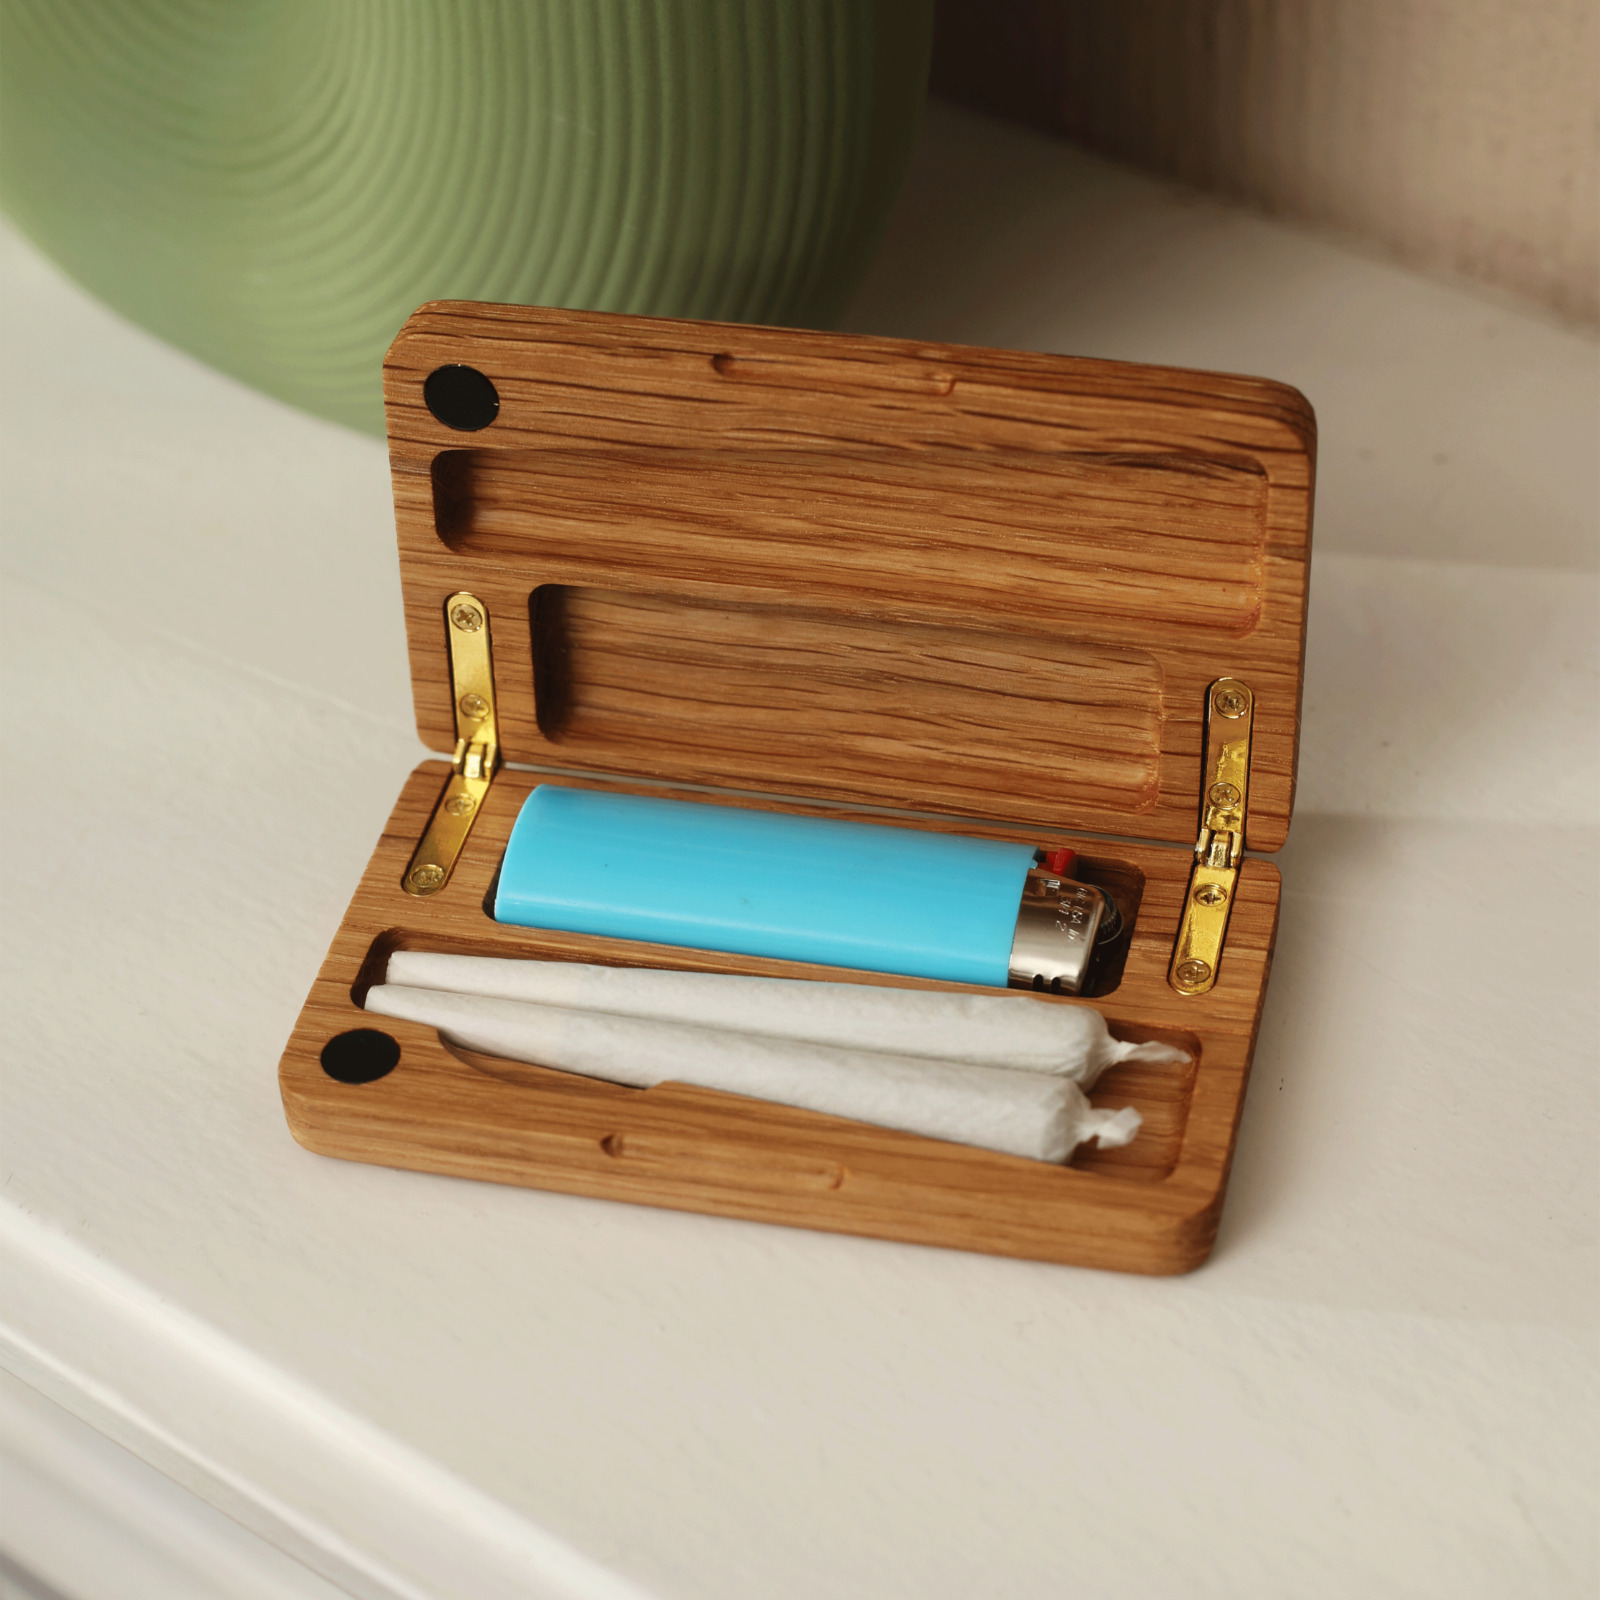 Hardwood Trail Blazer Joint & Lighter Case: All Natural Hardwood Box and Carrier